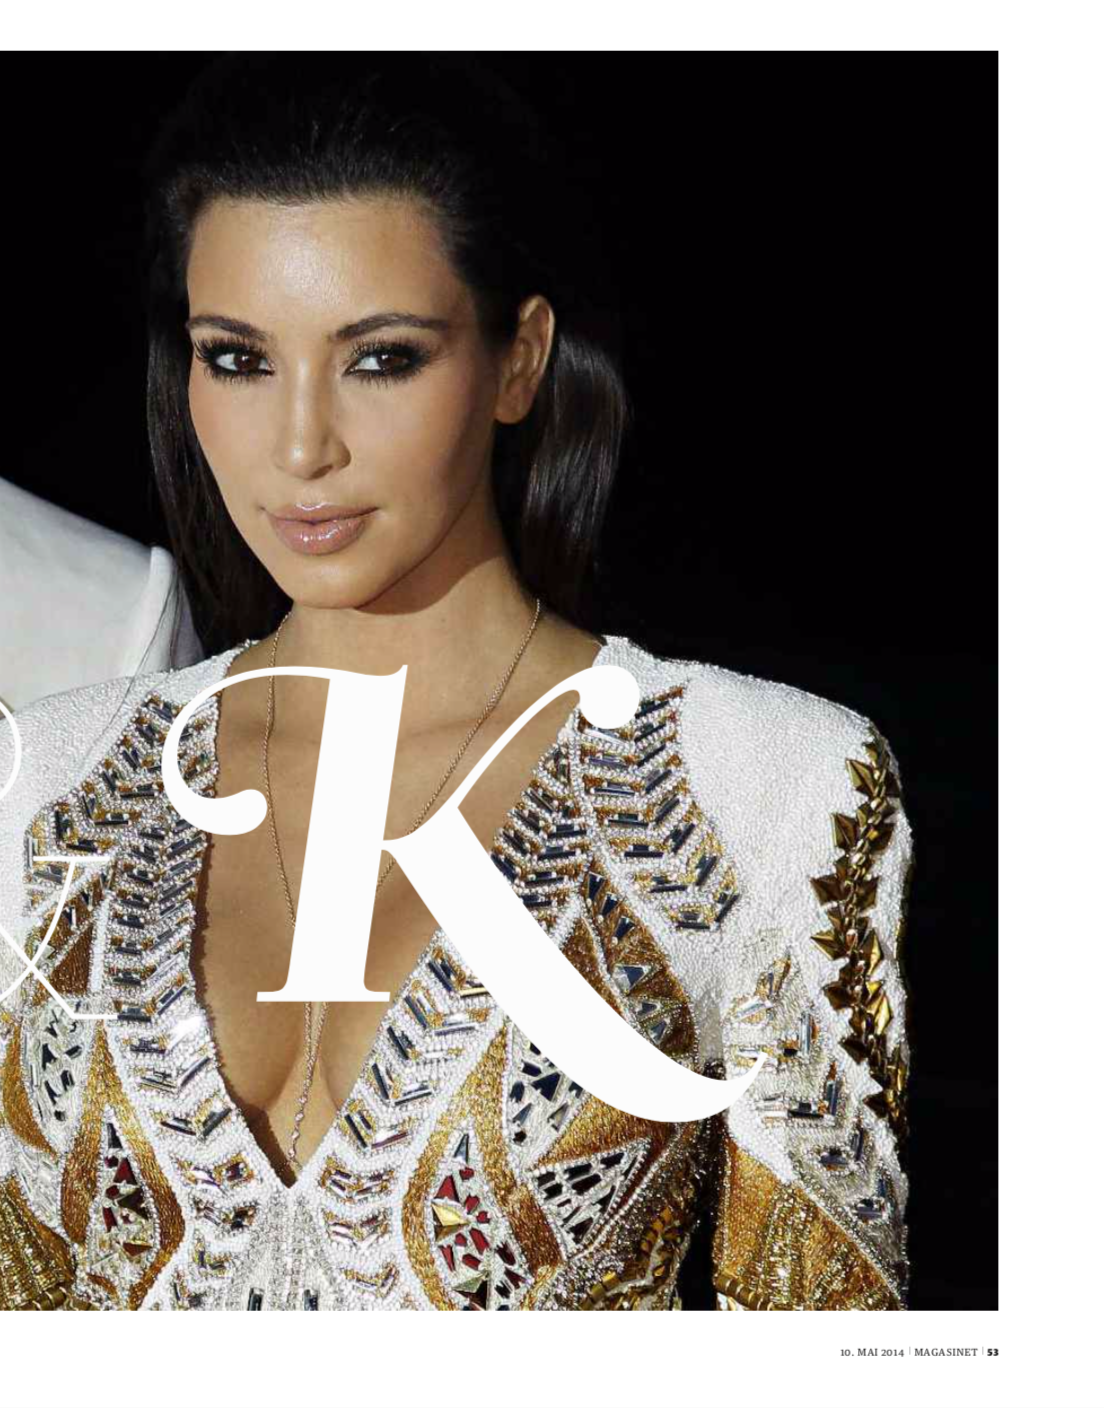 Dagbladet article about Kim Kardashian and Kanye West's wedding